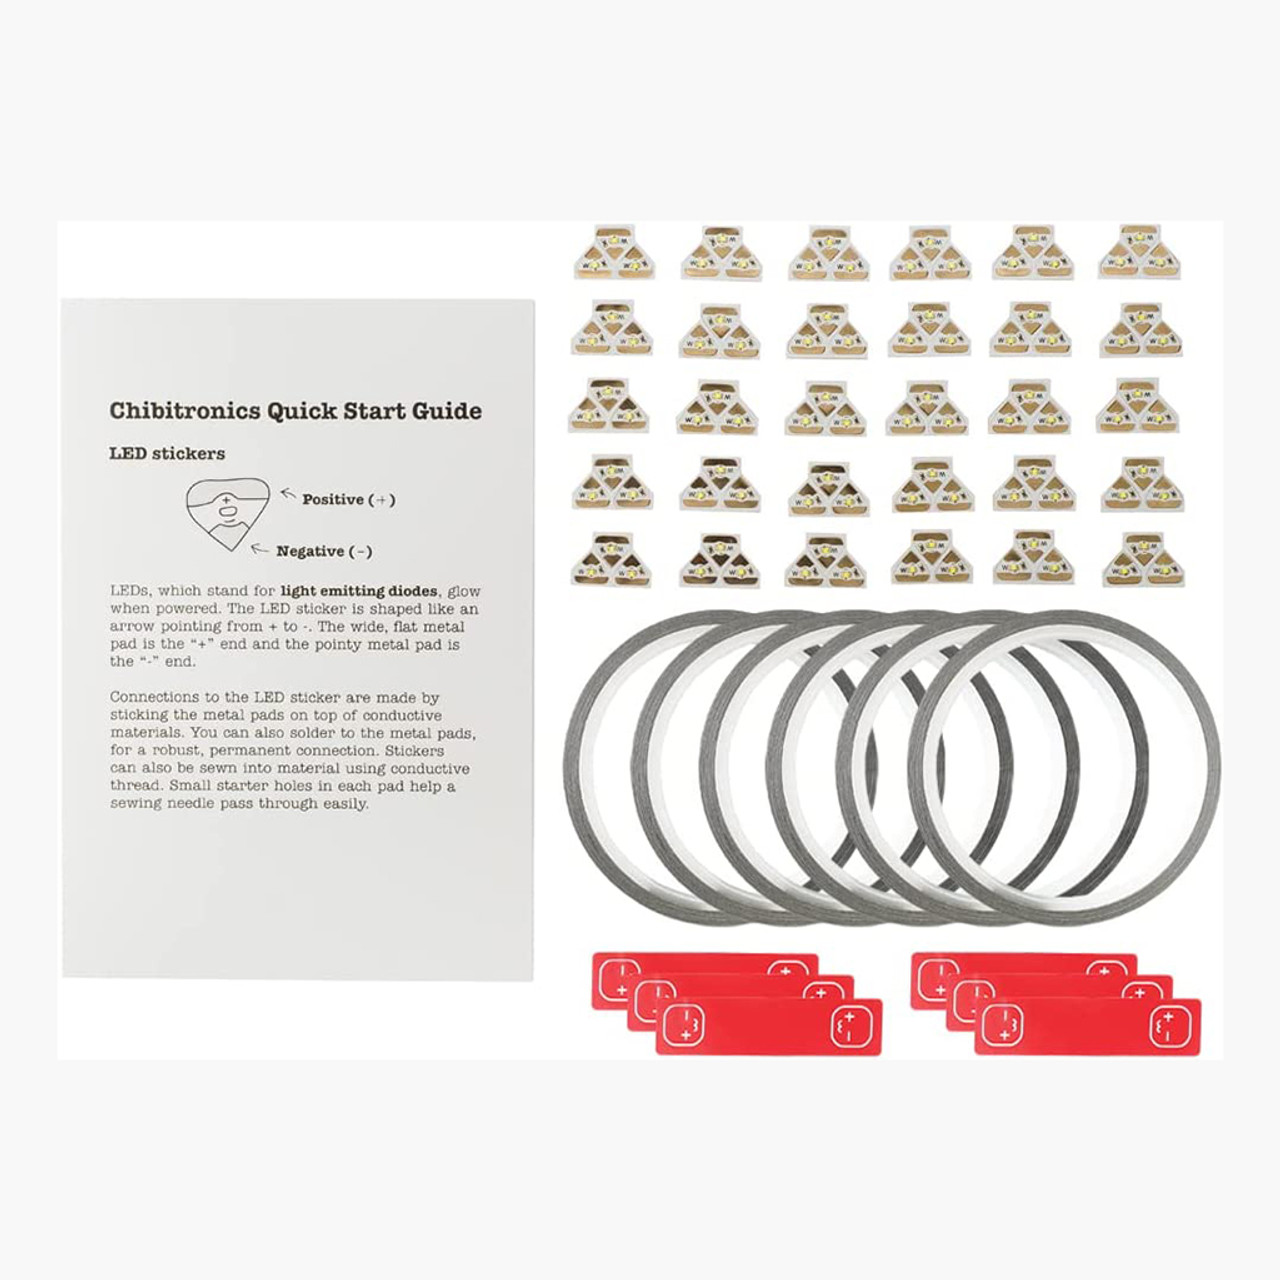 Circuit Sticker Sketchbook Kit Classroom Bundle – Chibitronics Inc.